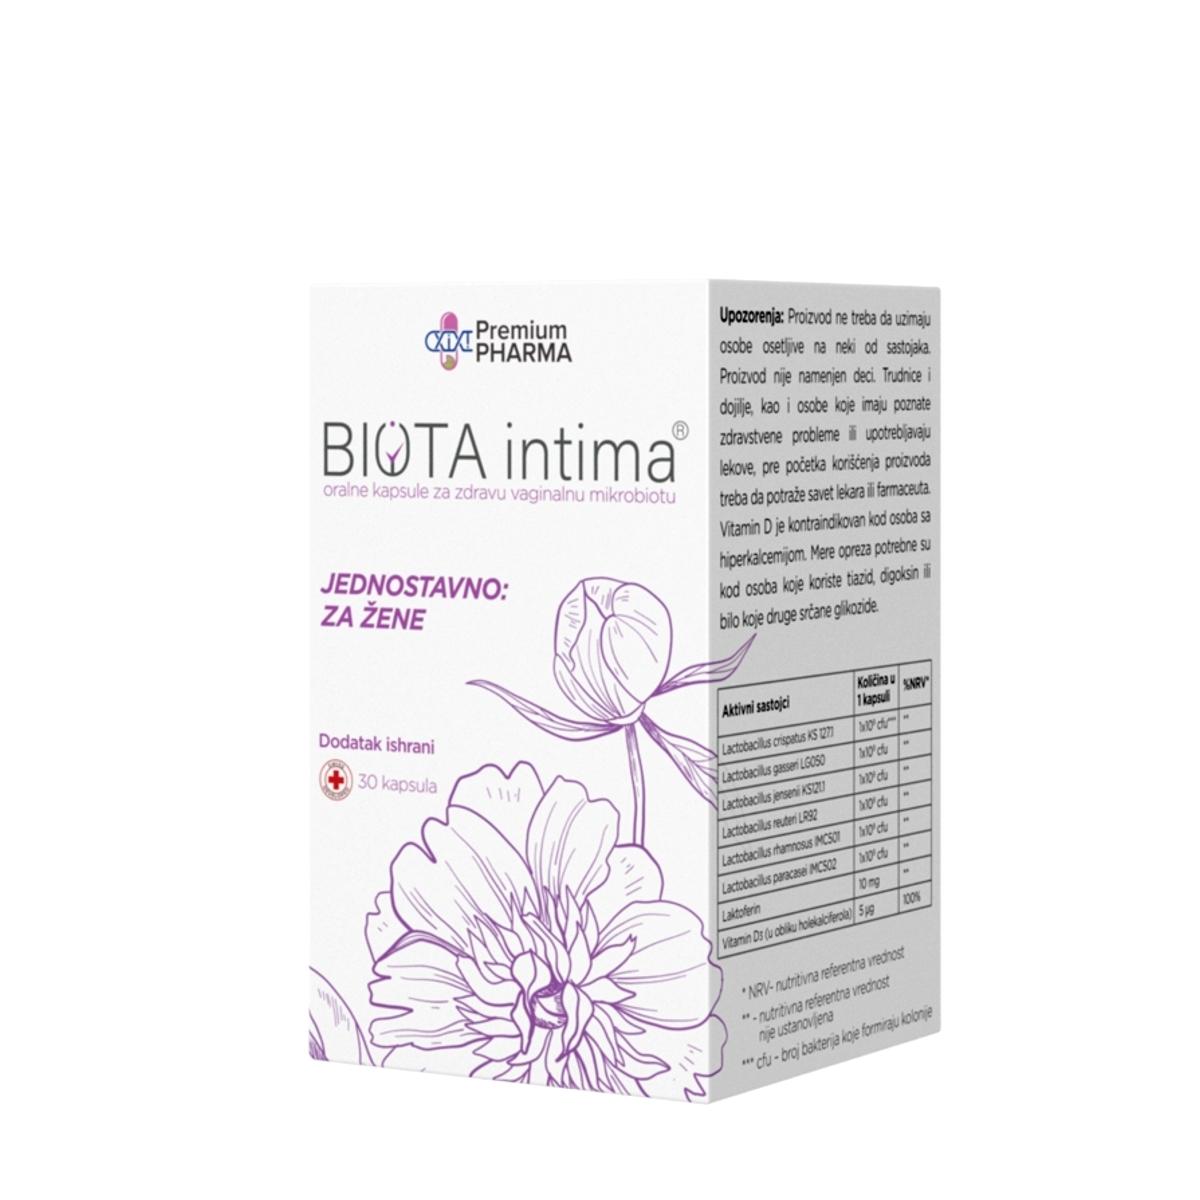 Selected image for Biota intima Oral kapsule 30/1